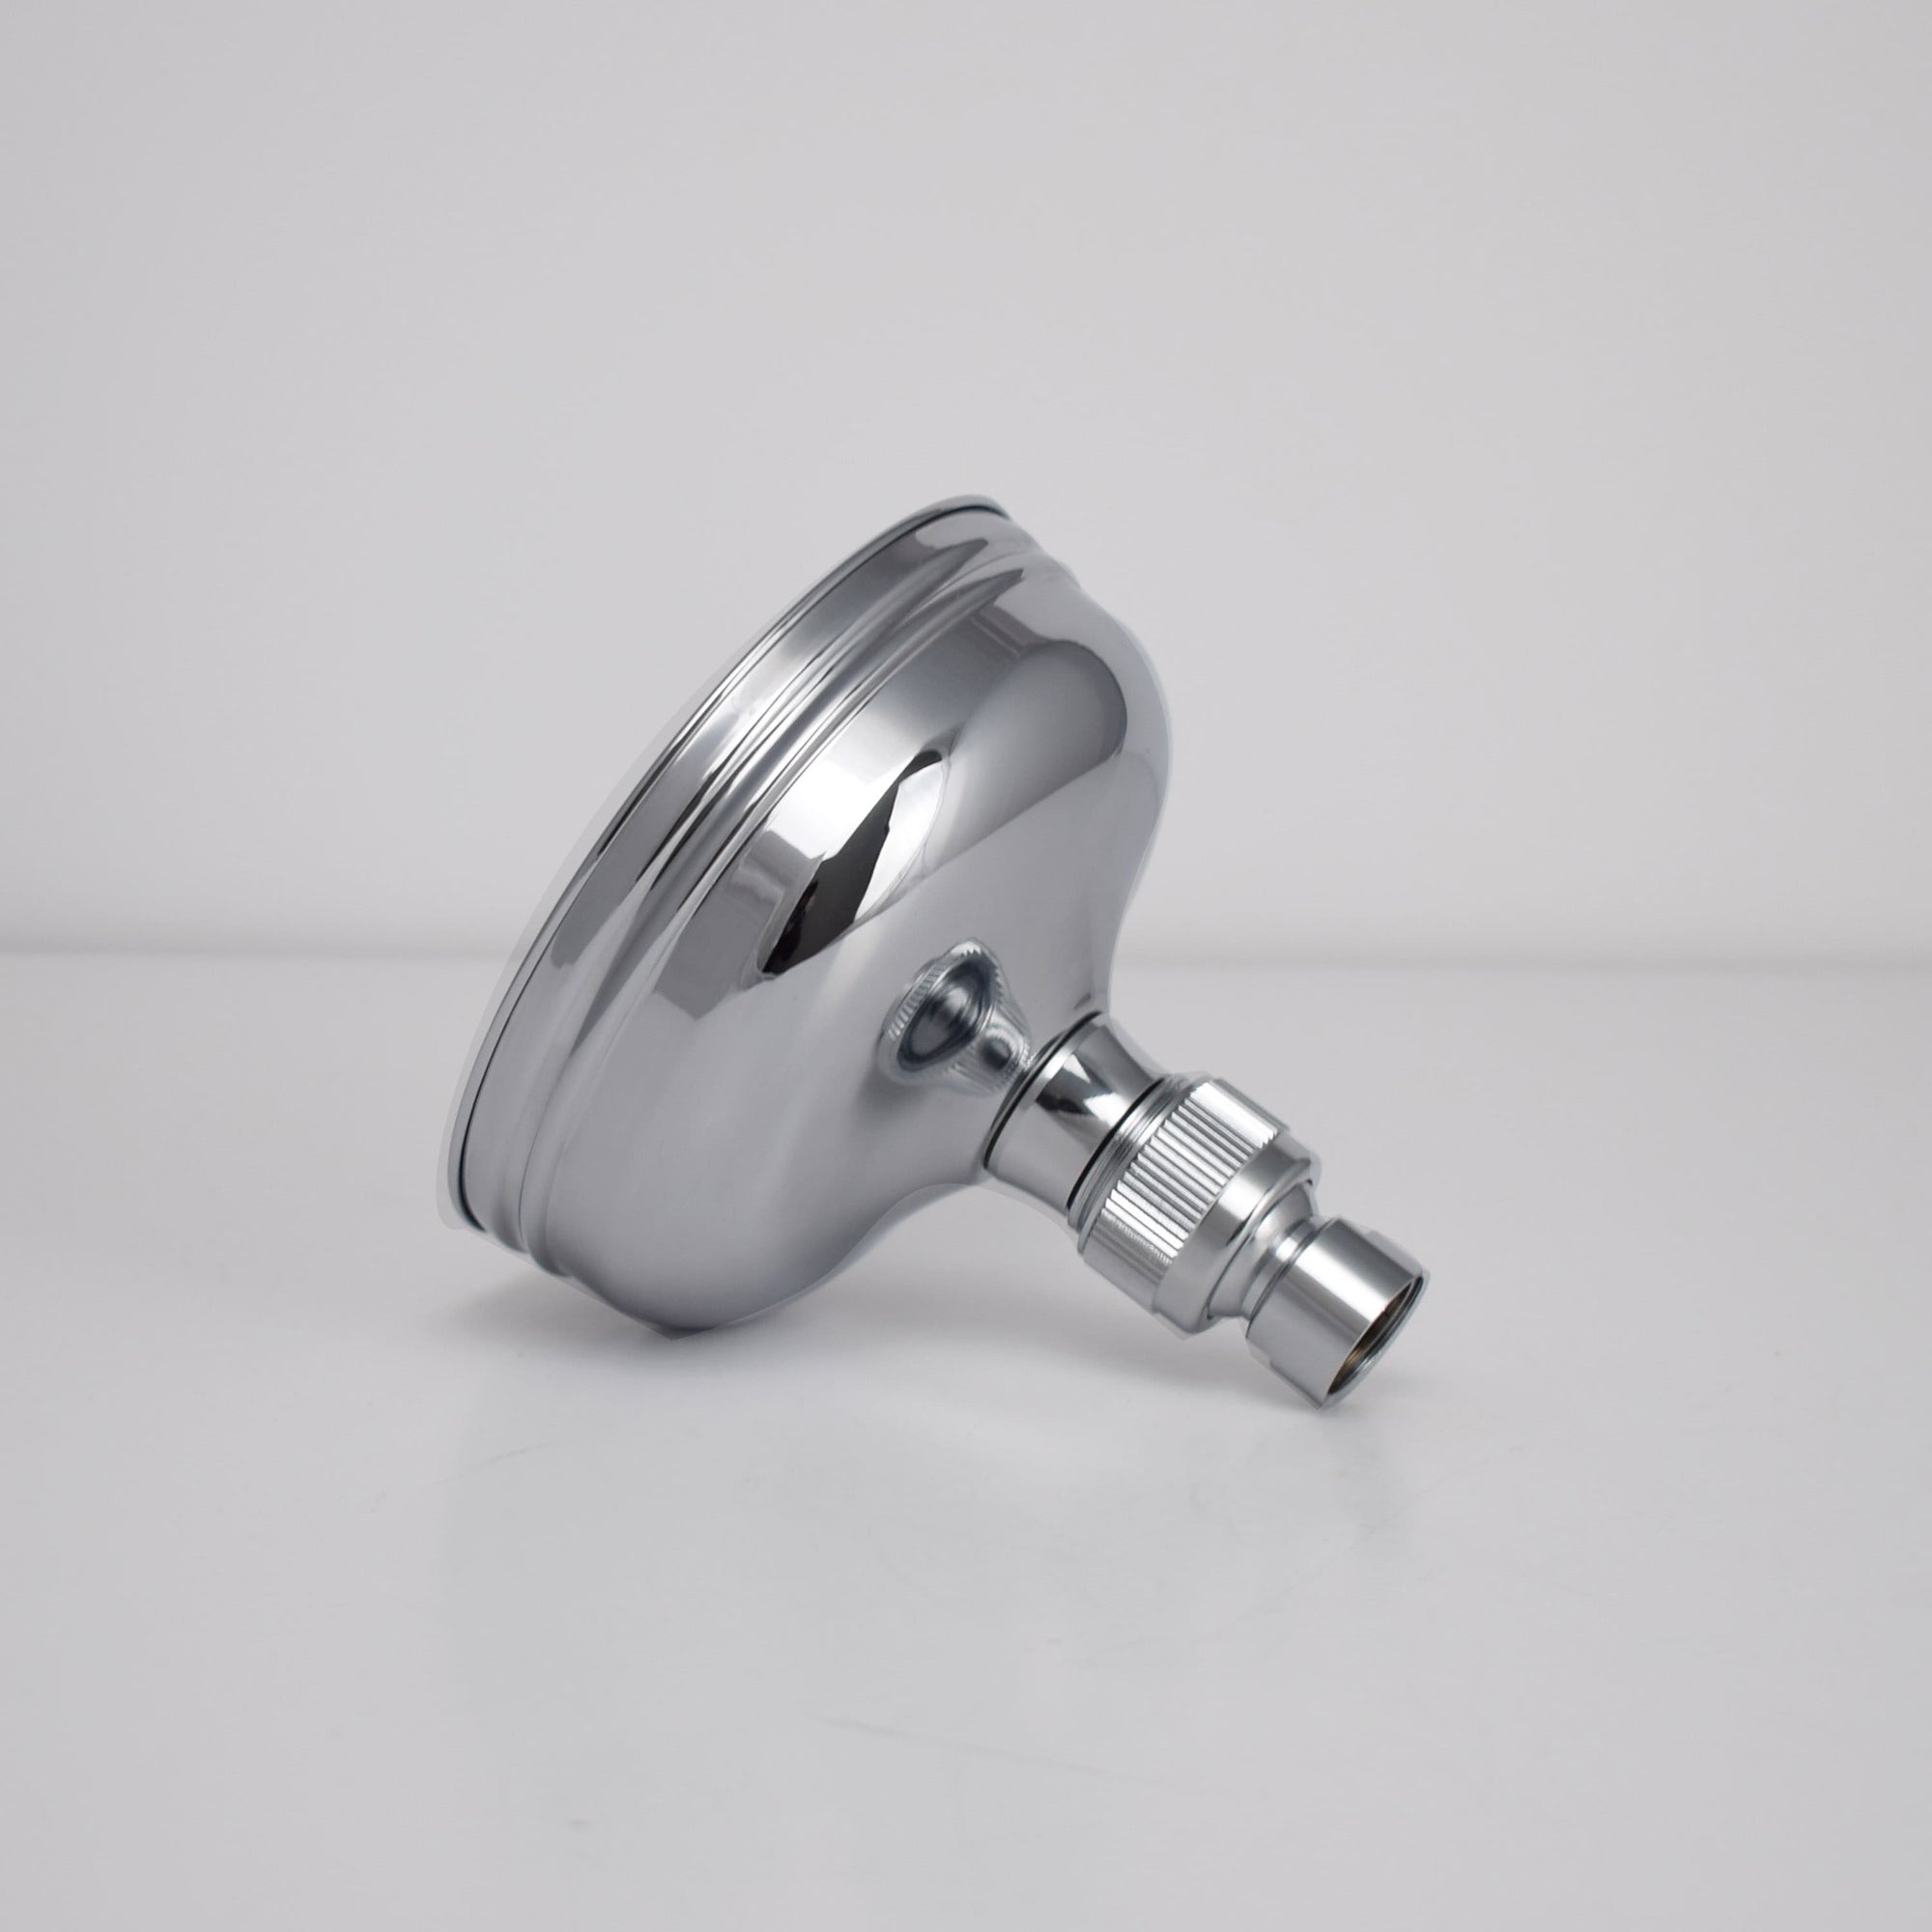 Chrome Shower Head - Small Bell Shape - Proper Copper Design